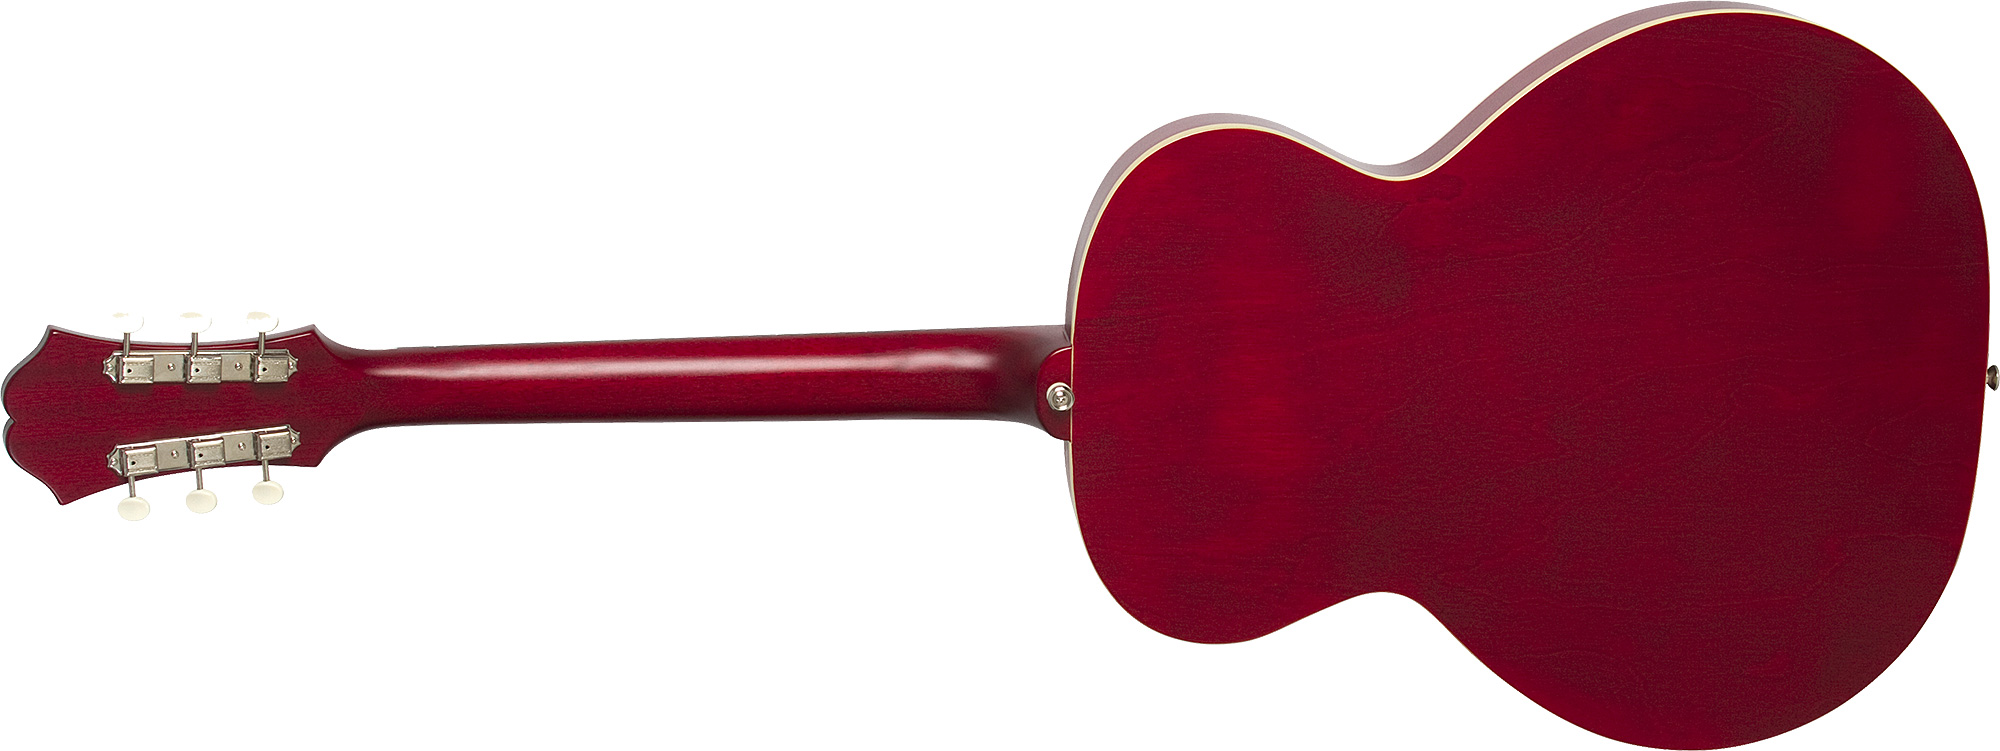 Epiphone Inspired By 1966 Century 2016 - Aged Gloss Cherry - Semi hollow elektriche gitaar - Variation 2